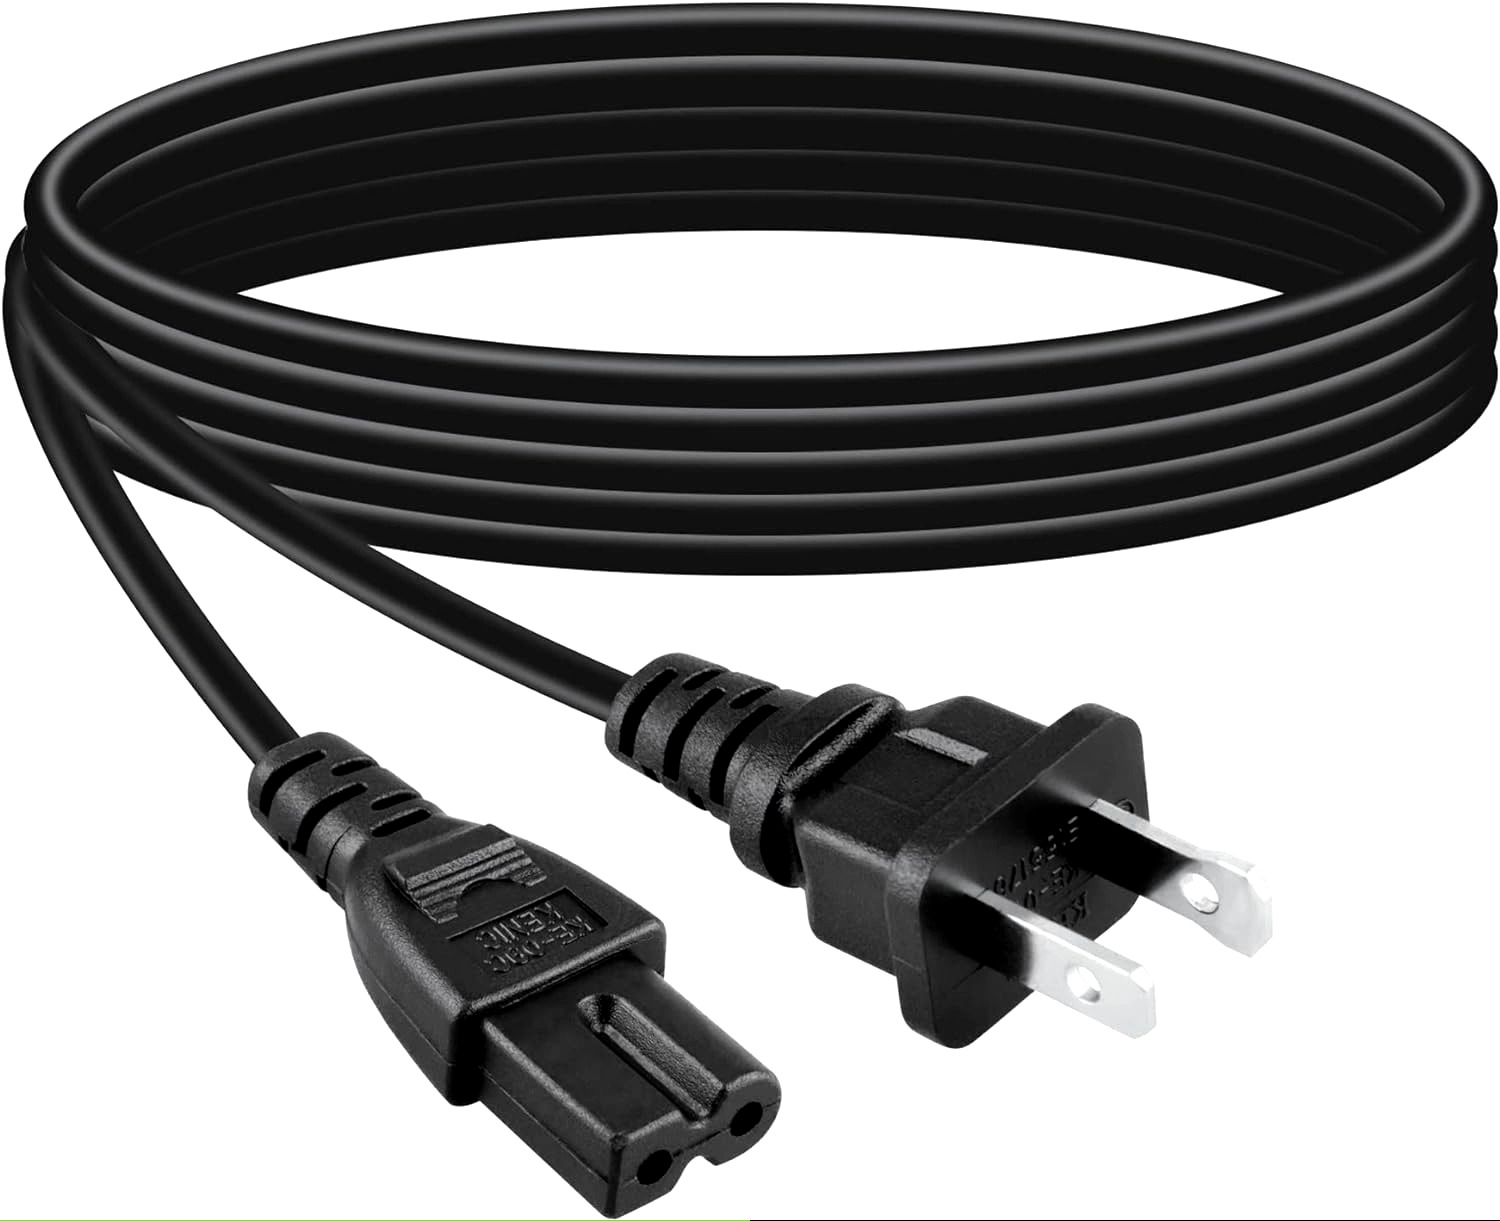 Original Part - Power Cord Cable Compatible with Vizio Smart TV all Models